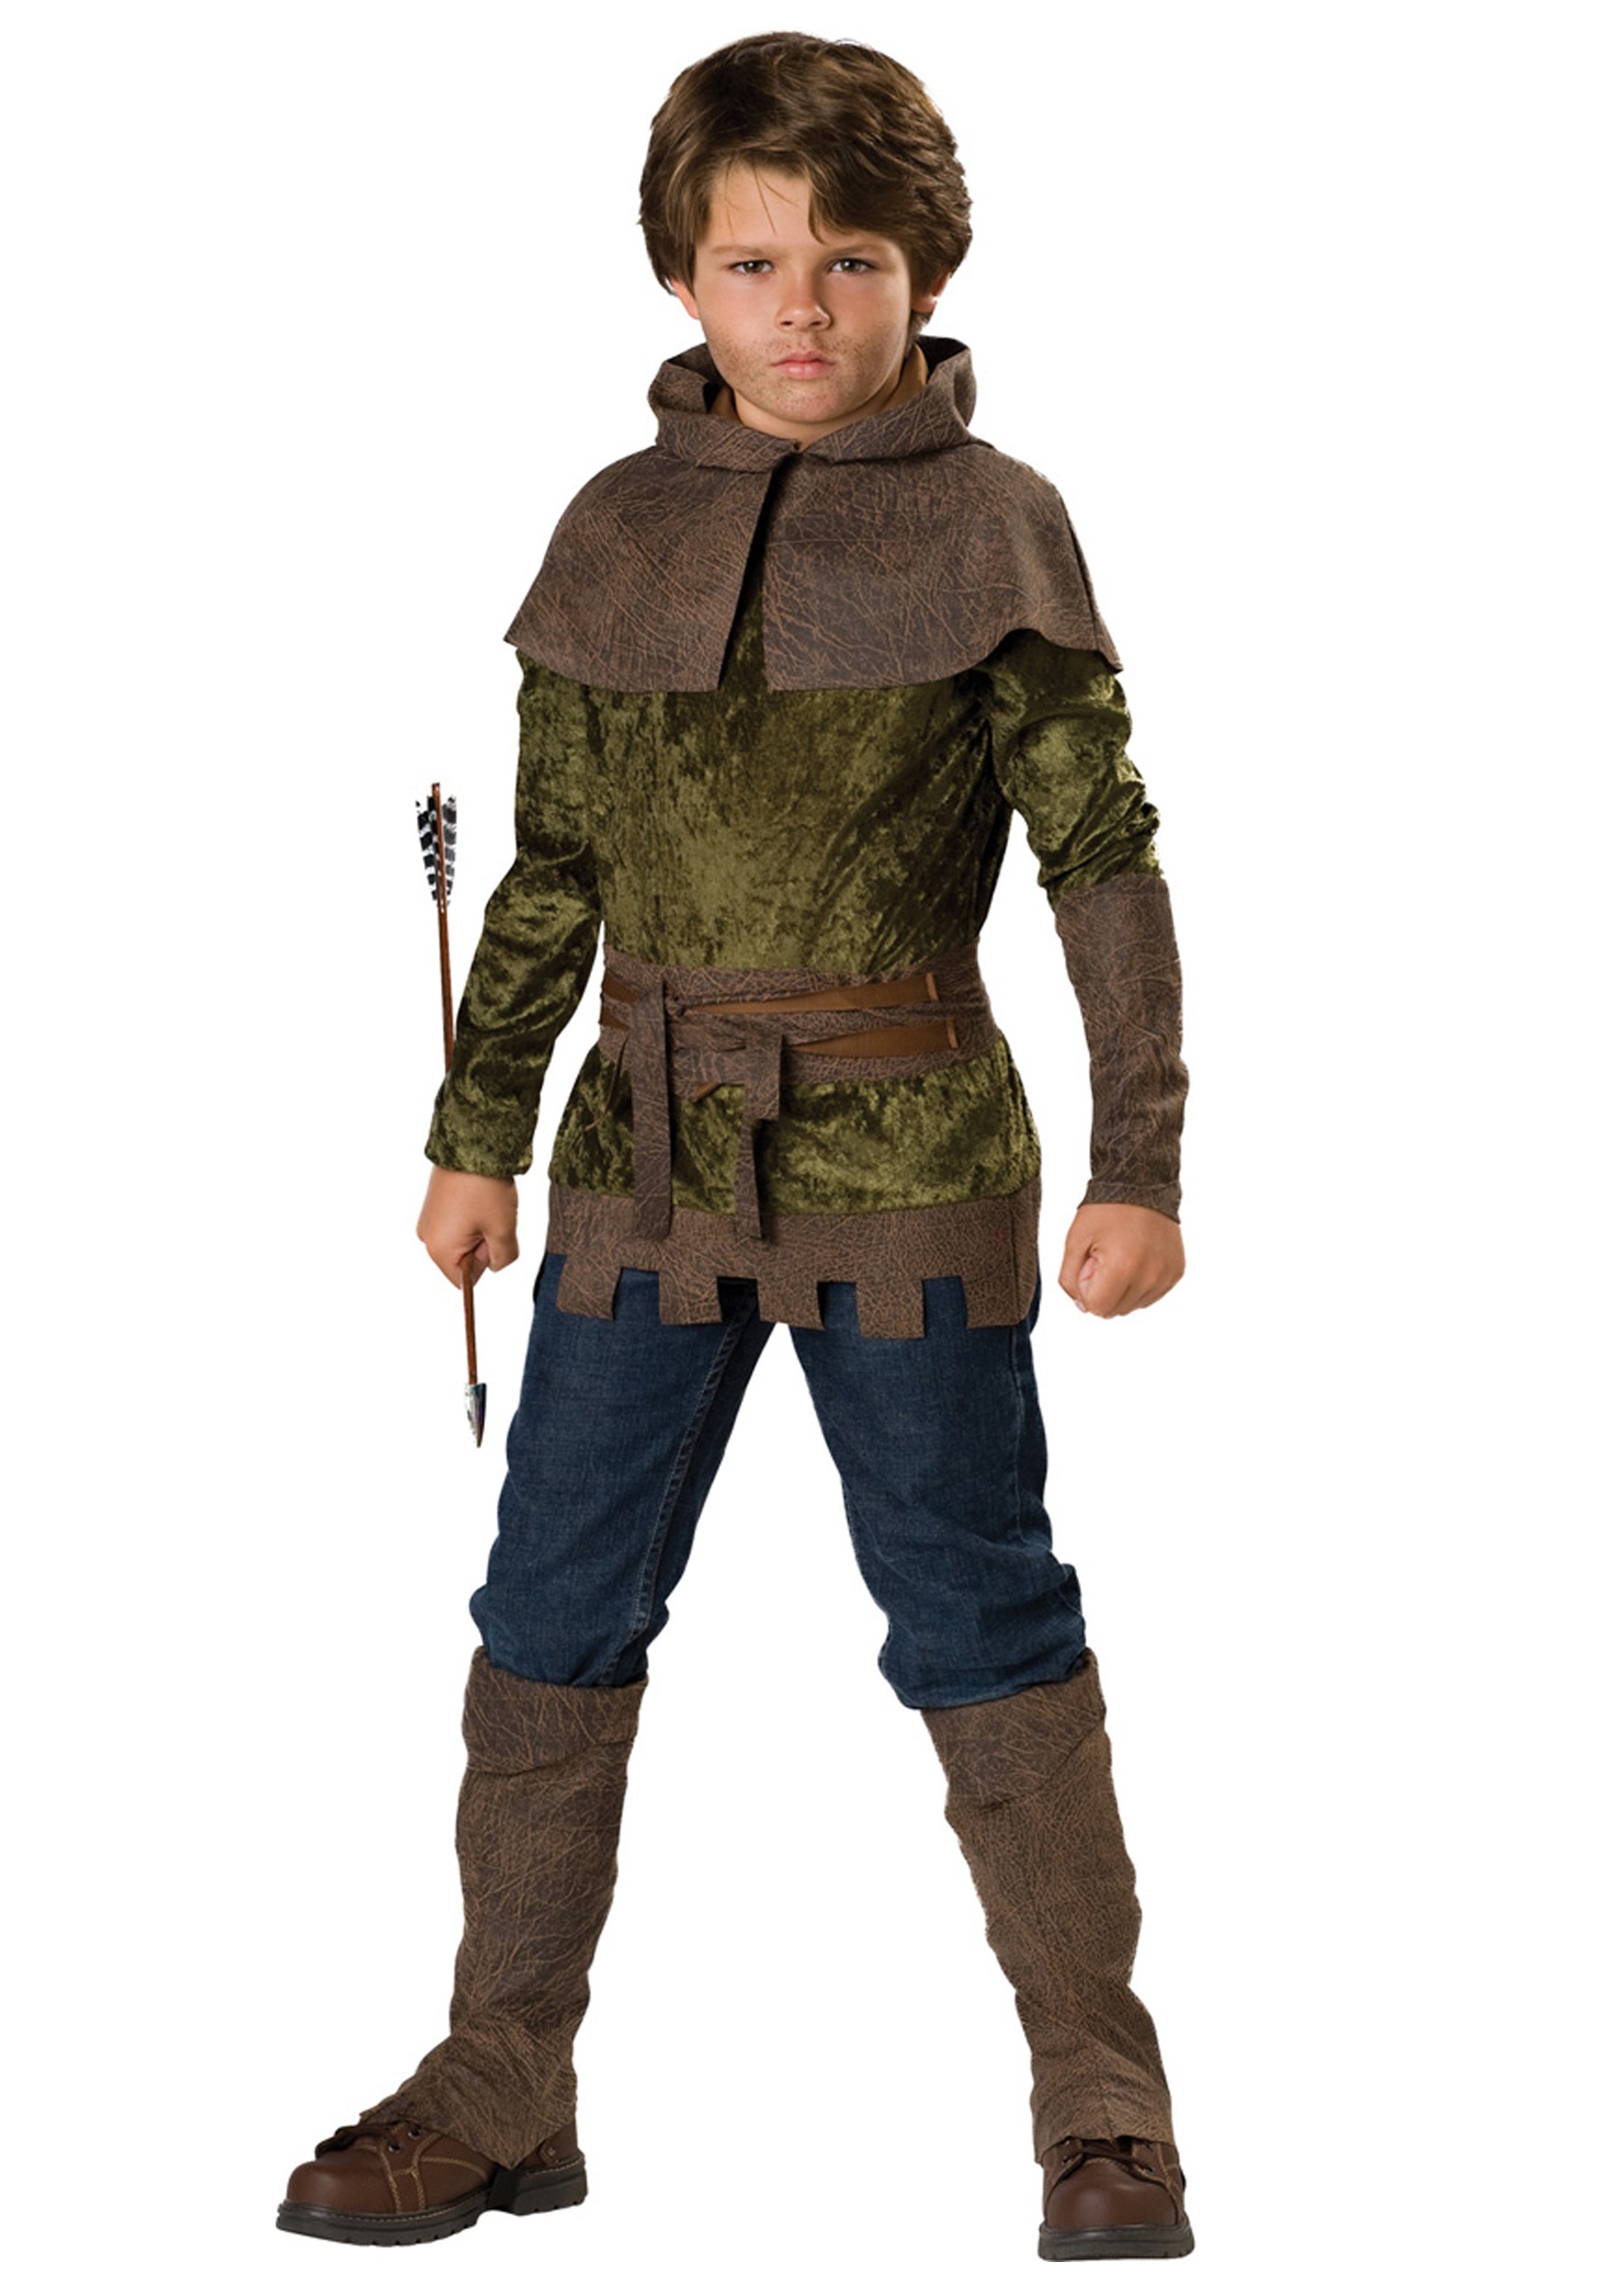 Robin Hood Costume for Boys